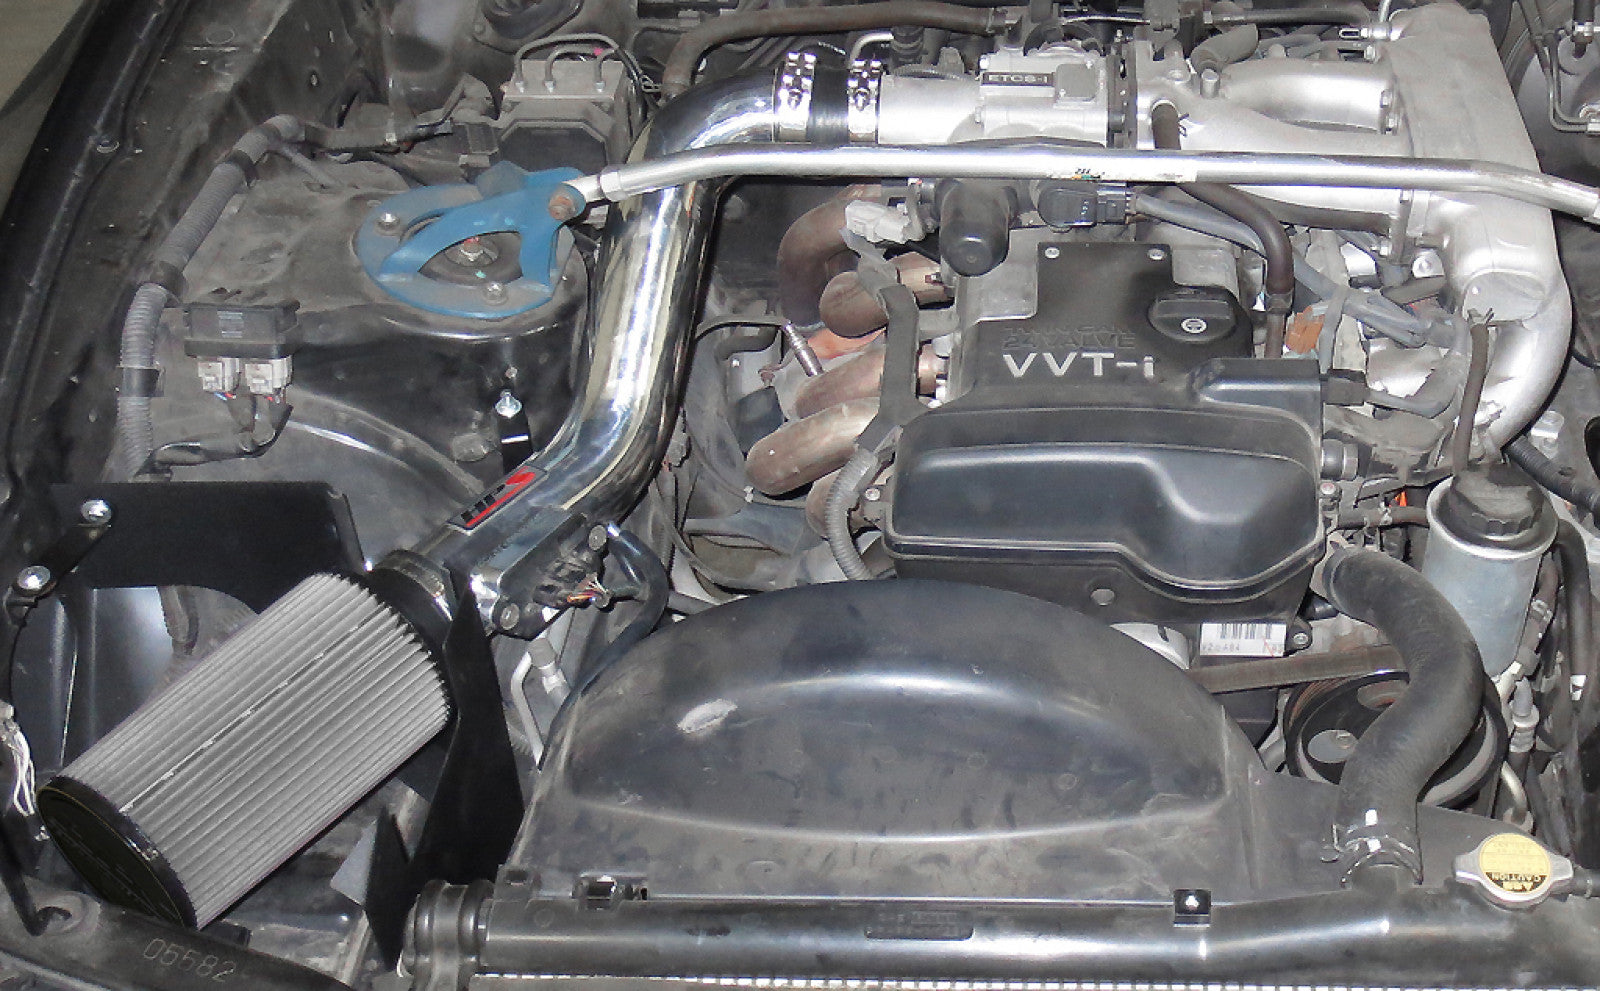 HPS Performance Blue Cold Air Intake Kit for 97-98 Toyota Supra Non Turbo VVTi